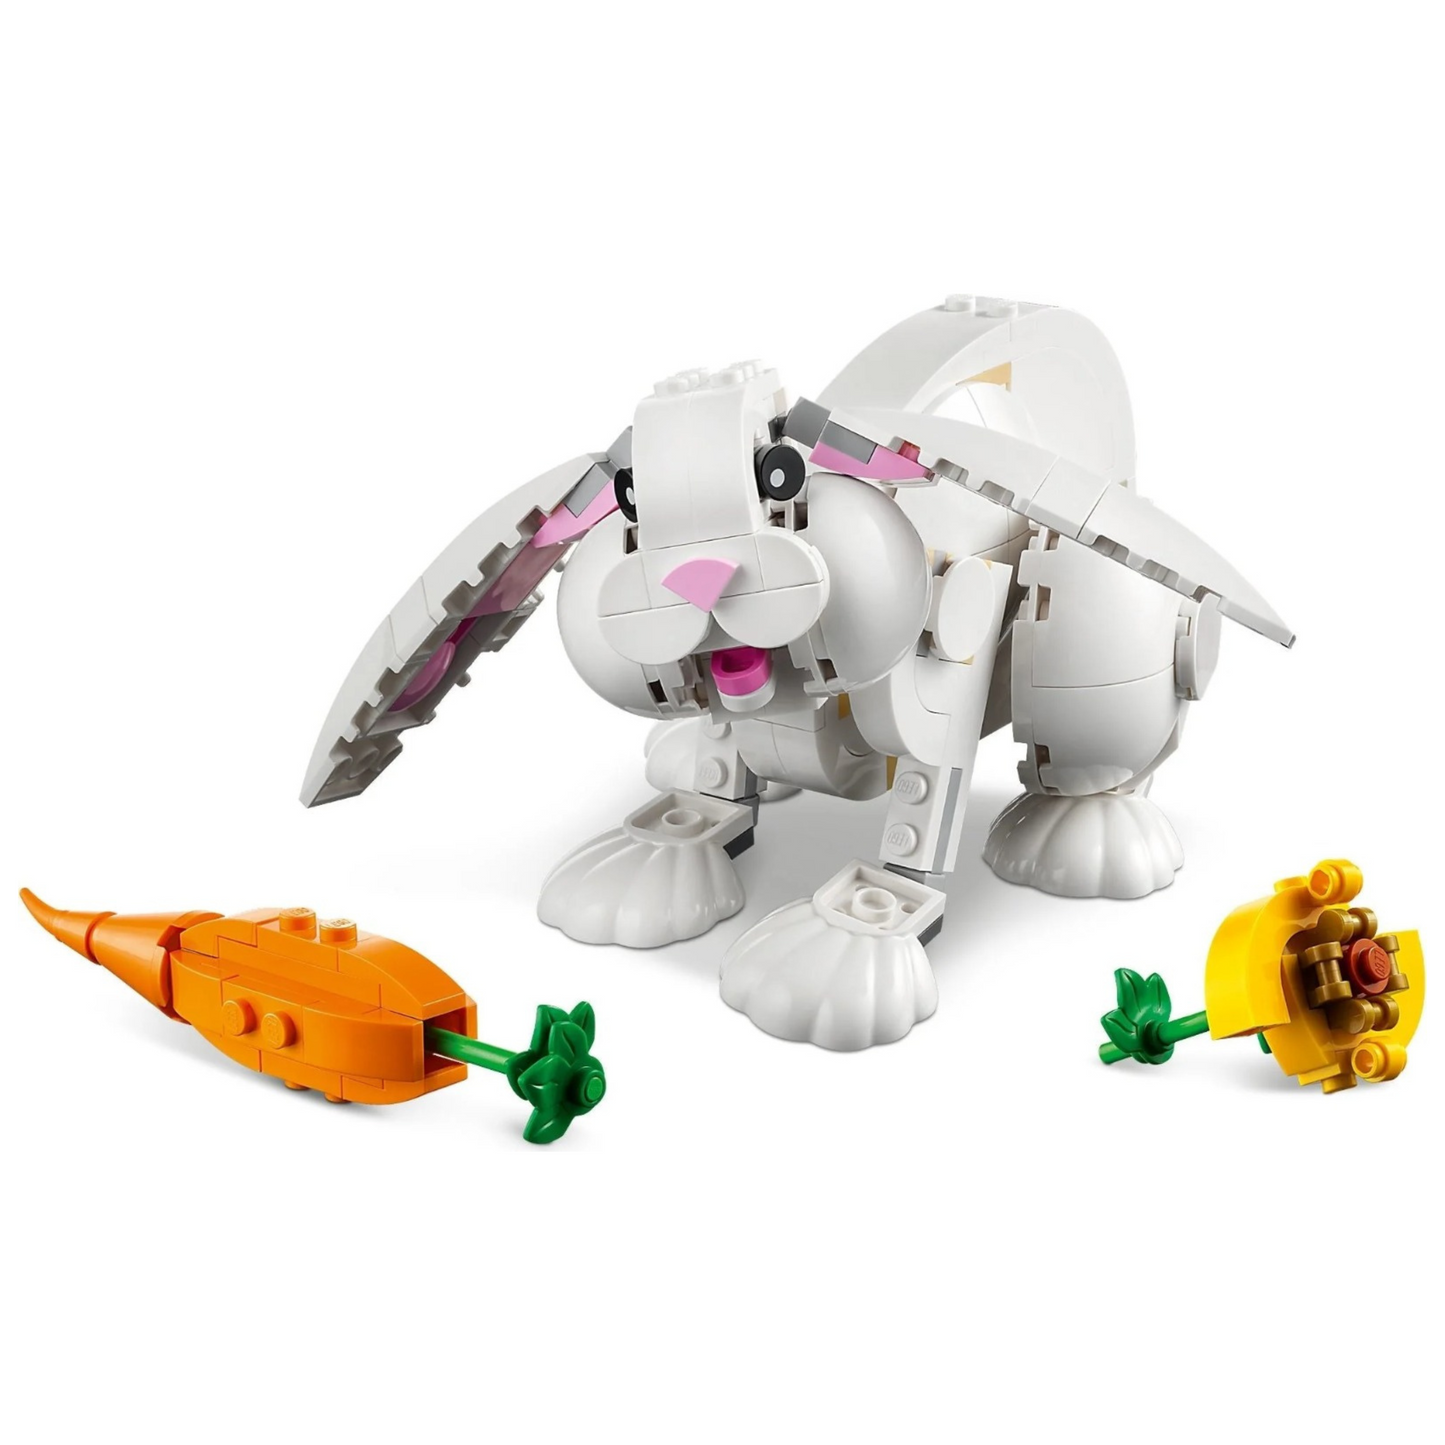 LEGO Creator White Rabbit